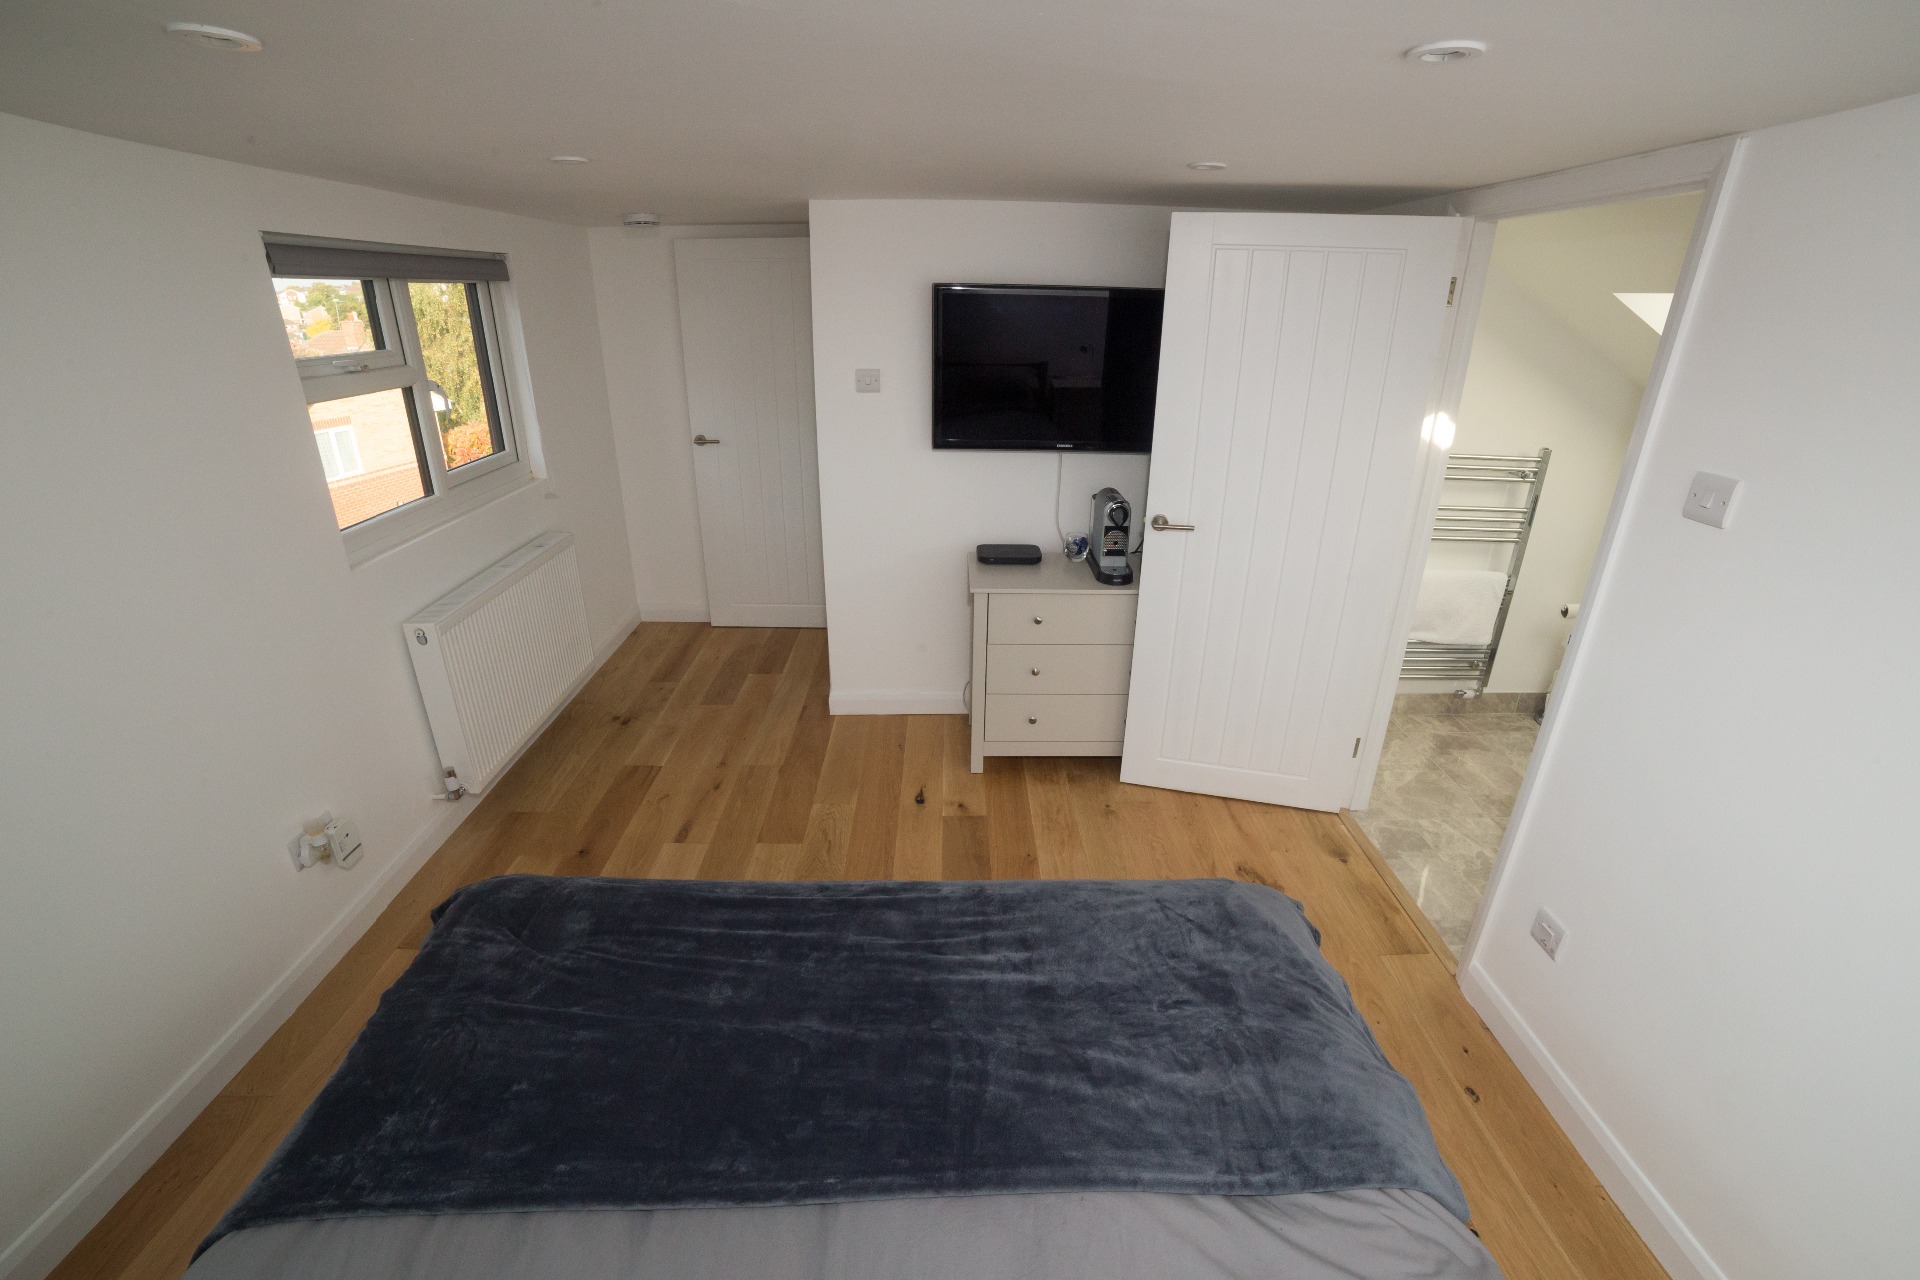 Bedroom in loft conversion, Maidenhead